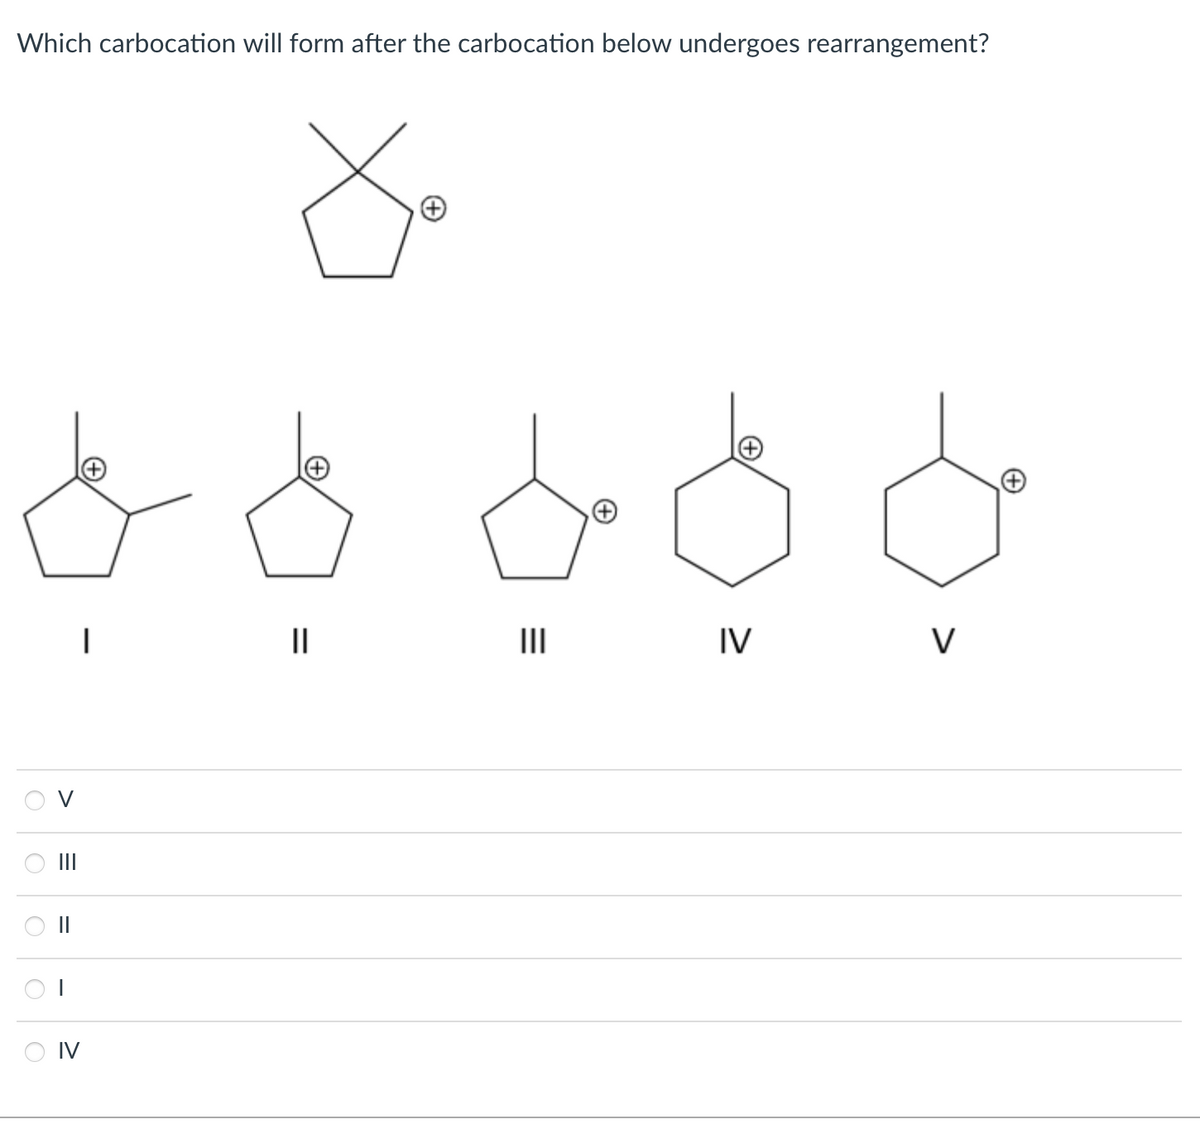 Which carbocation will form after the carbocation below undergoes rearrangement?
||
I
IV
+
8d8d
||
|||
IV
V